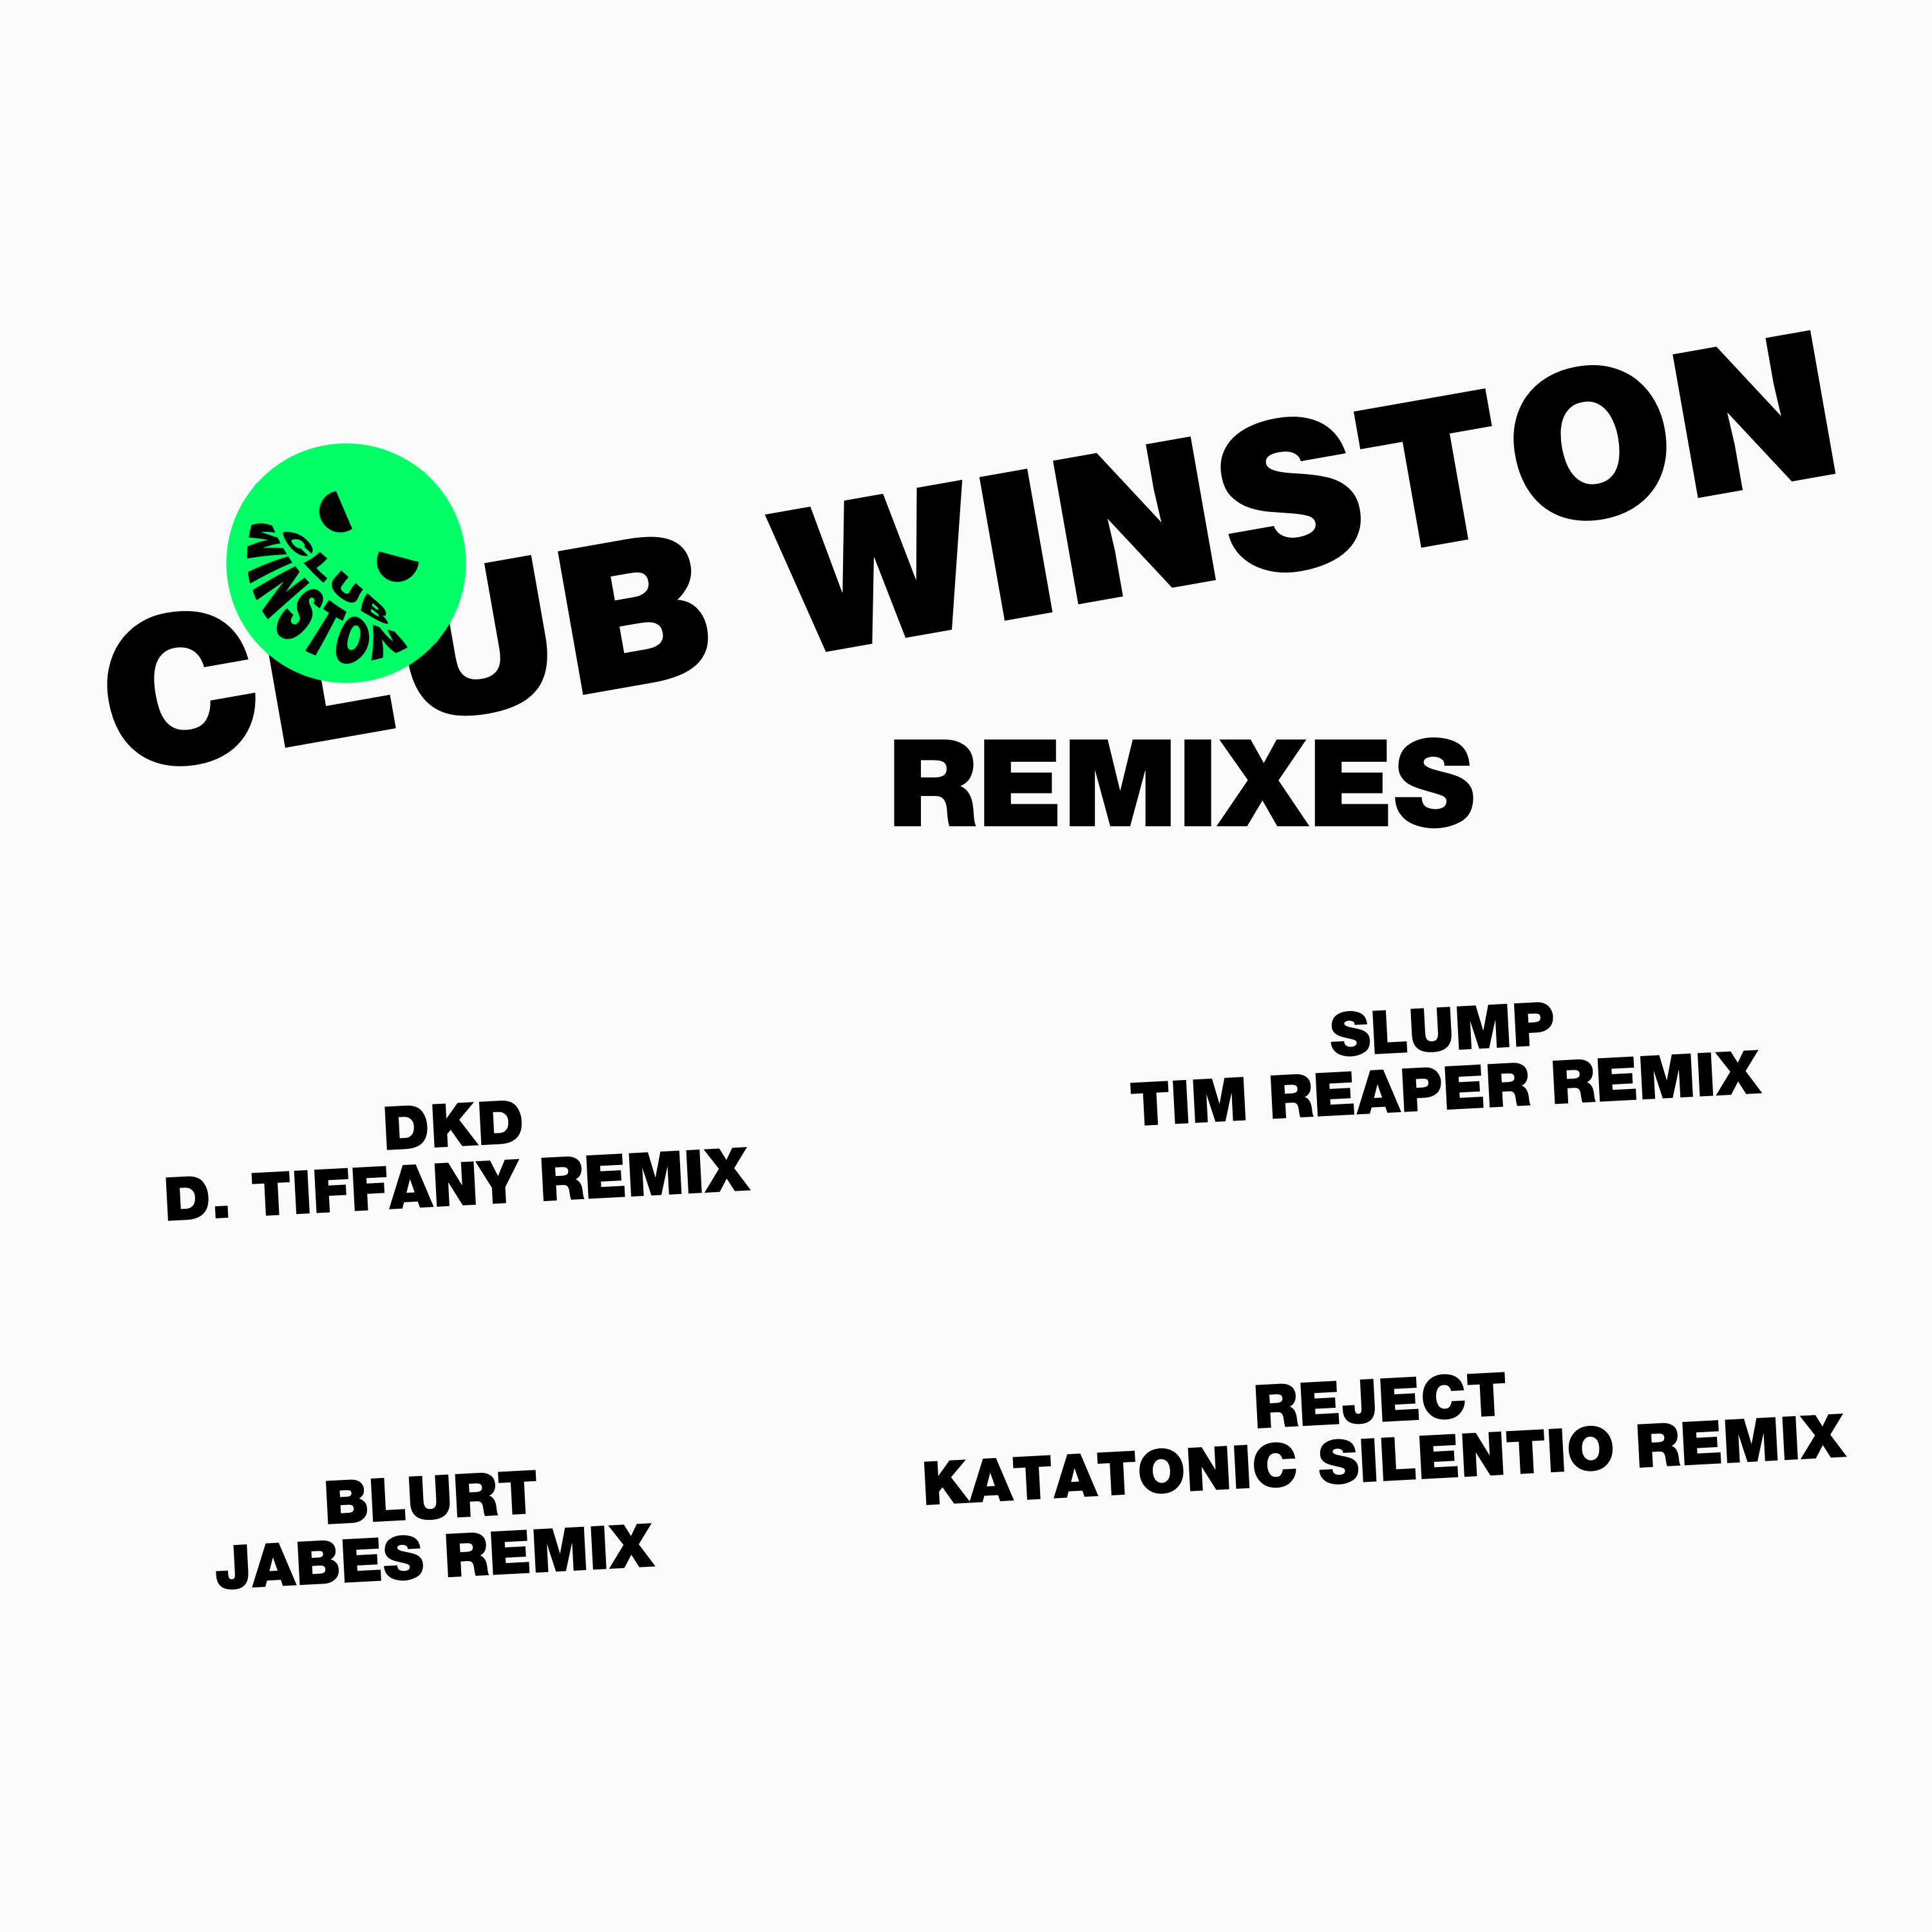 Club Winston/REMIXES 12"